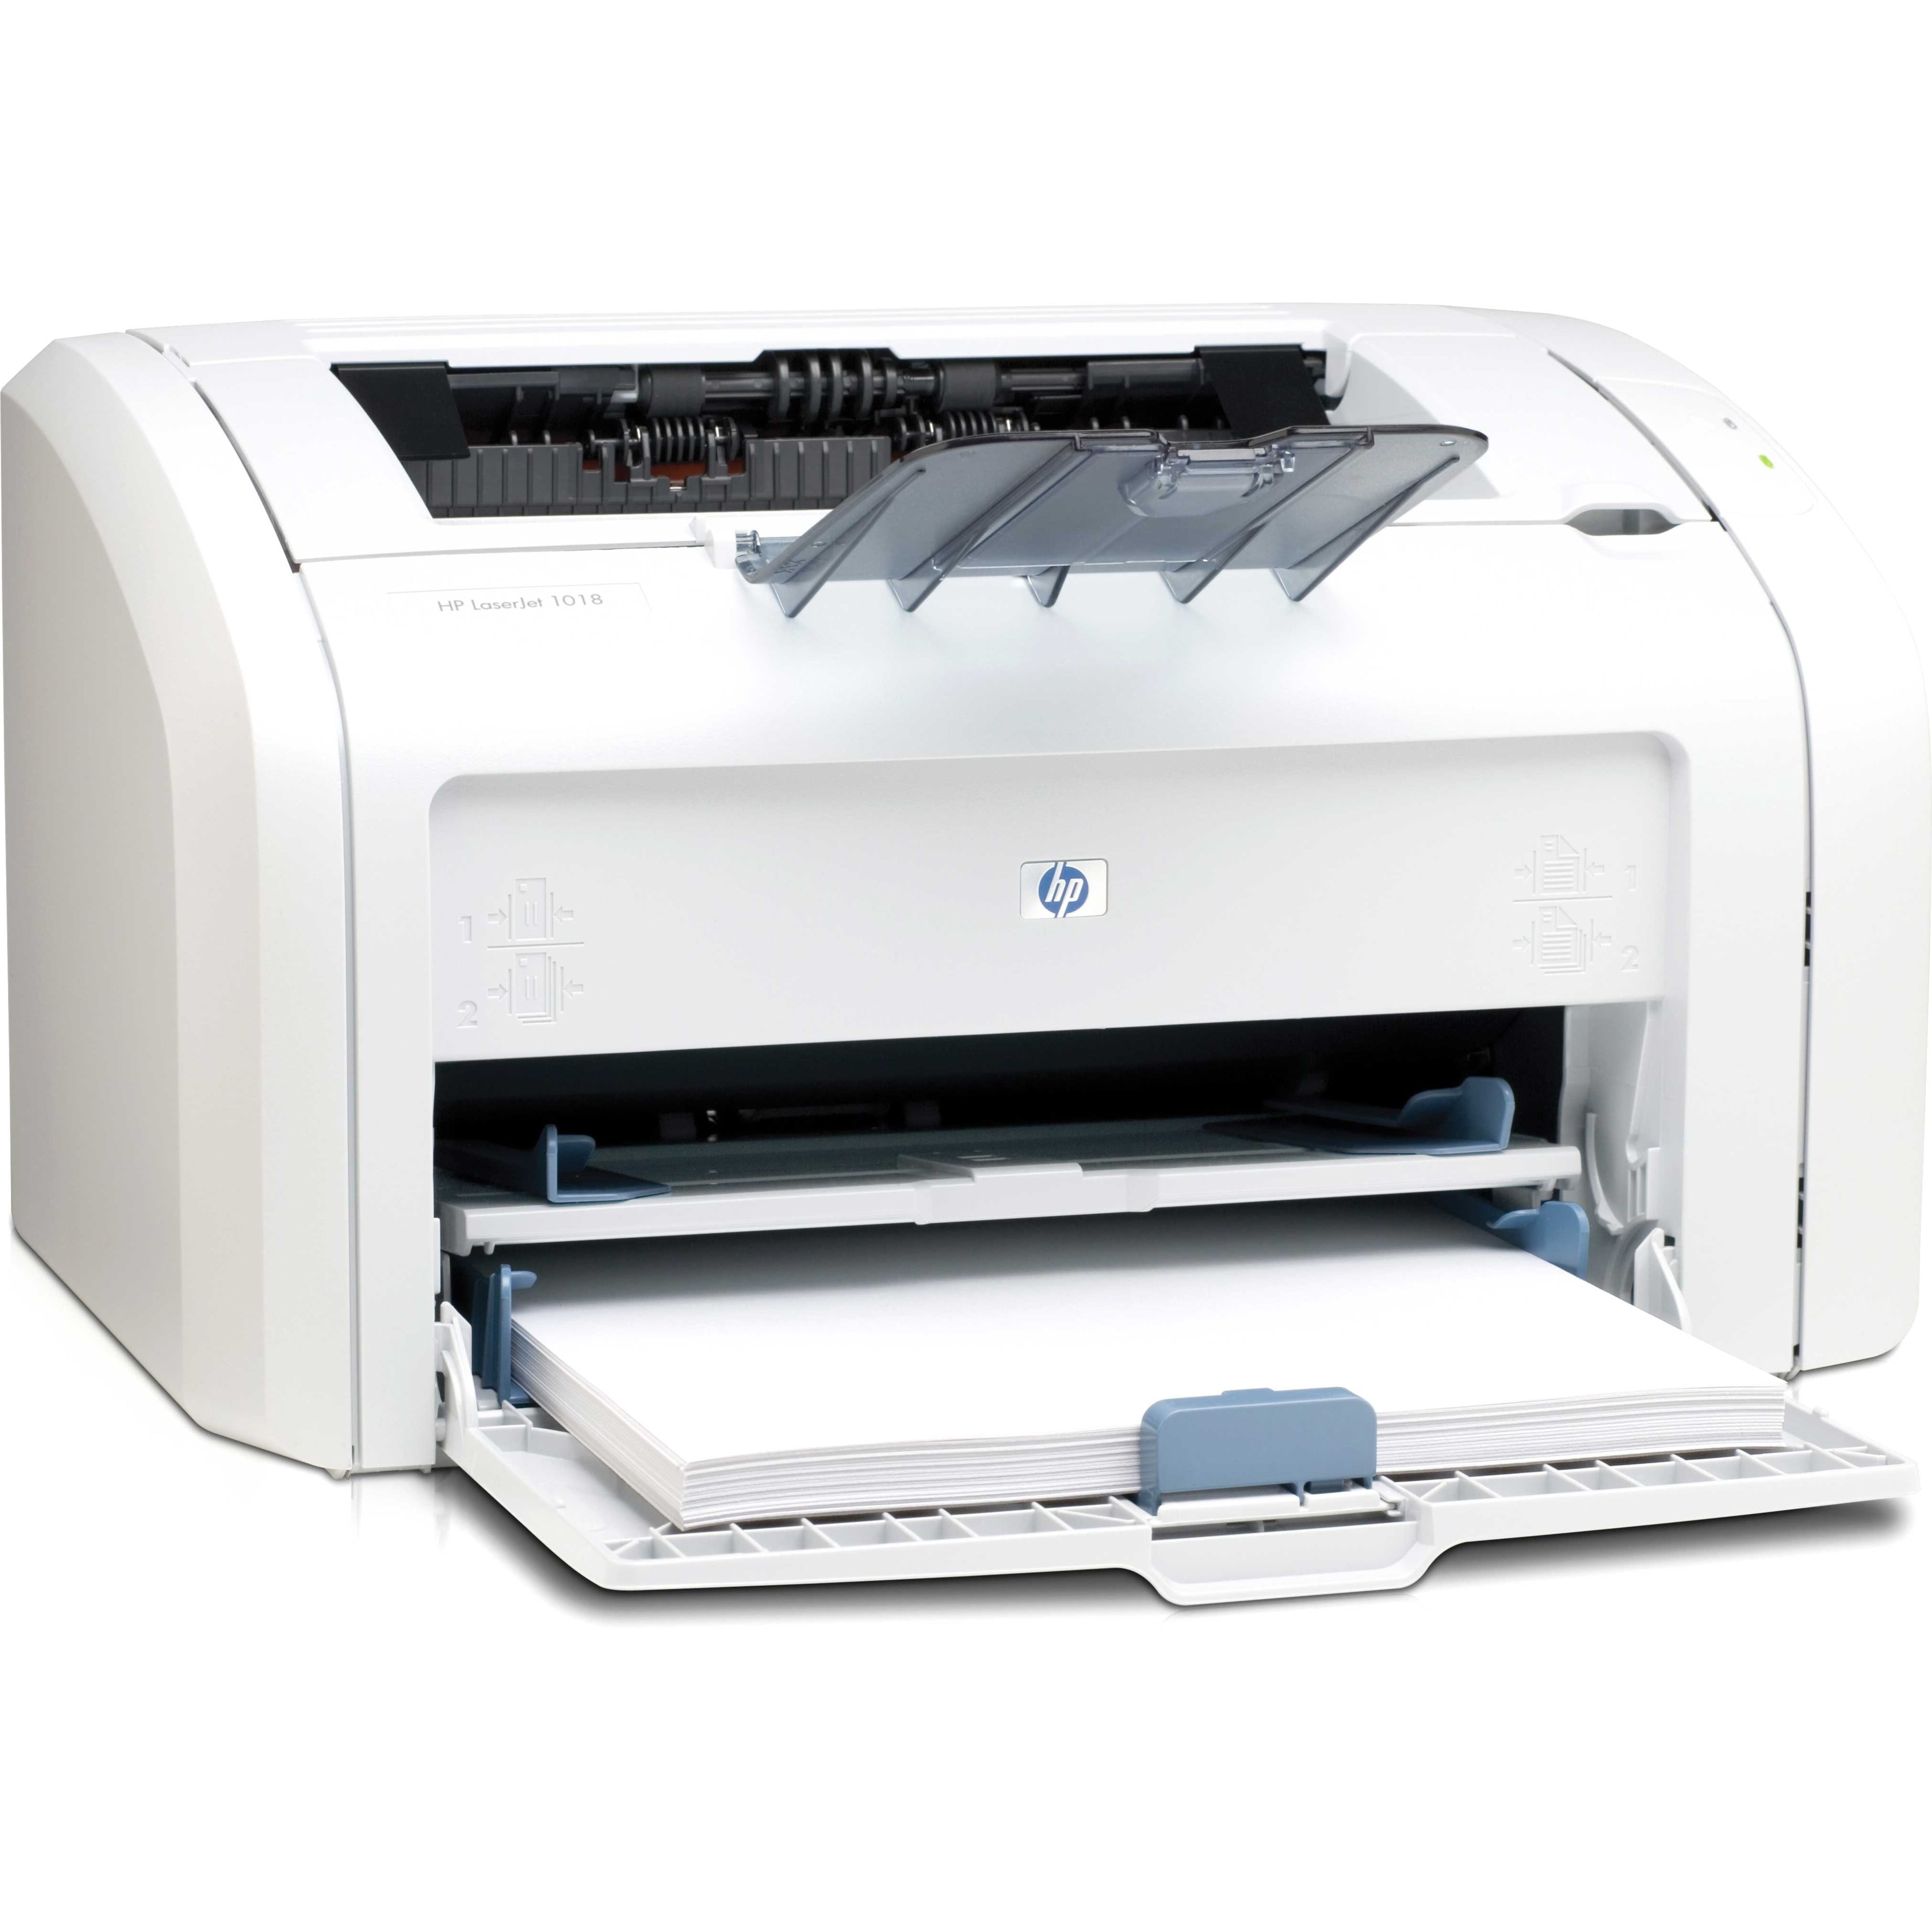 HP LaserJet 1018 Laser Printer, Monochrome -